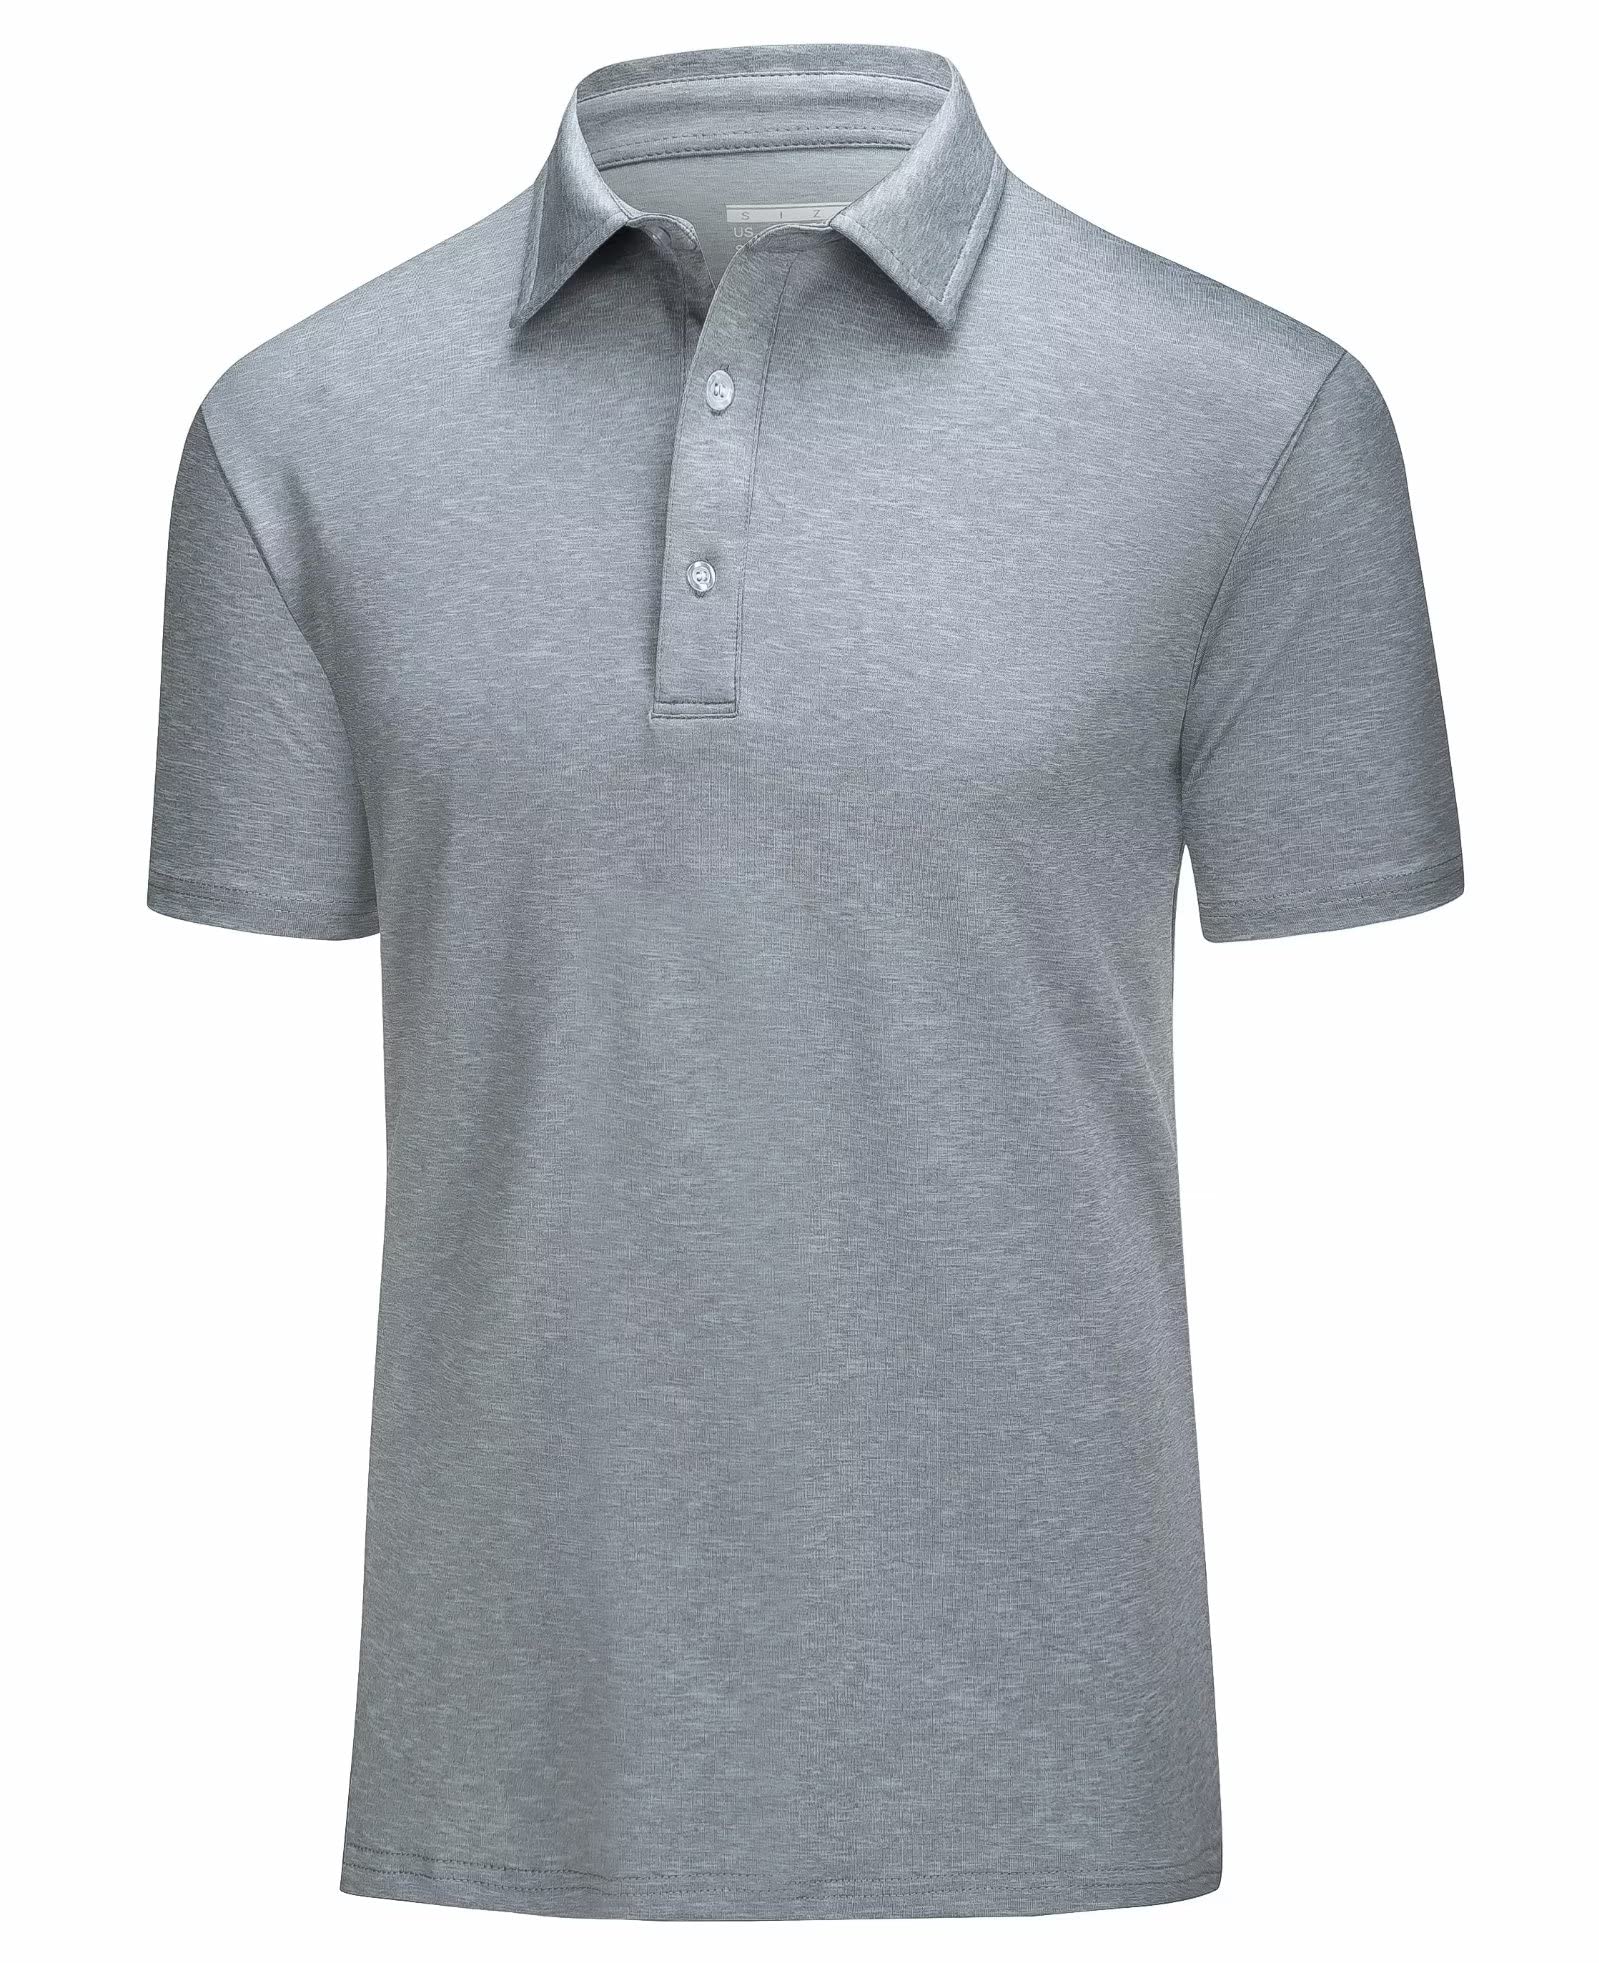 MAGCOMSEN Polo Shirts for Men Long Sleeve Golf Shirts Fishing